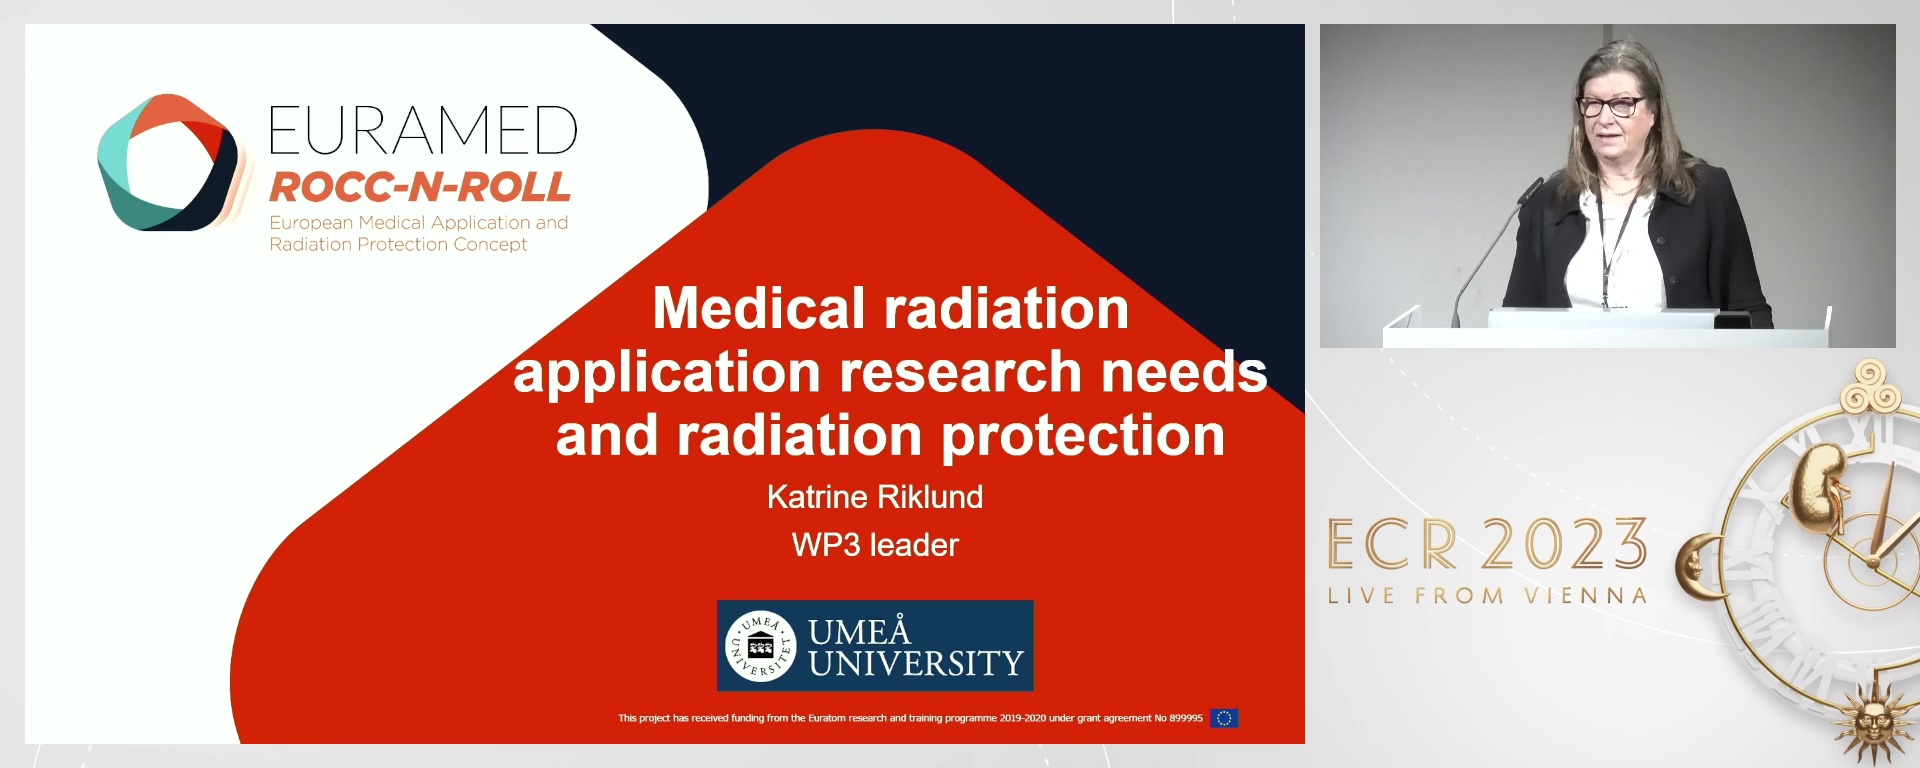 Medical radiation application research needs and radiation protection - Katrine  Riklund, Umeå / SE